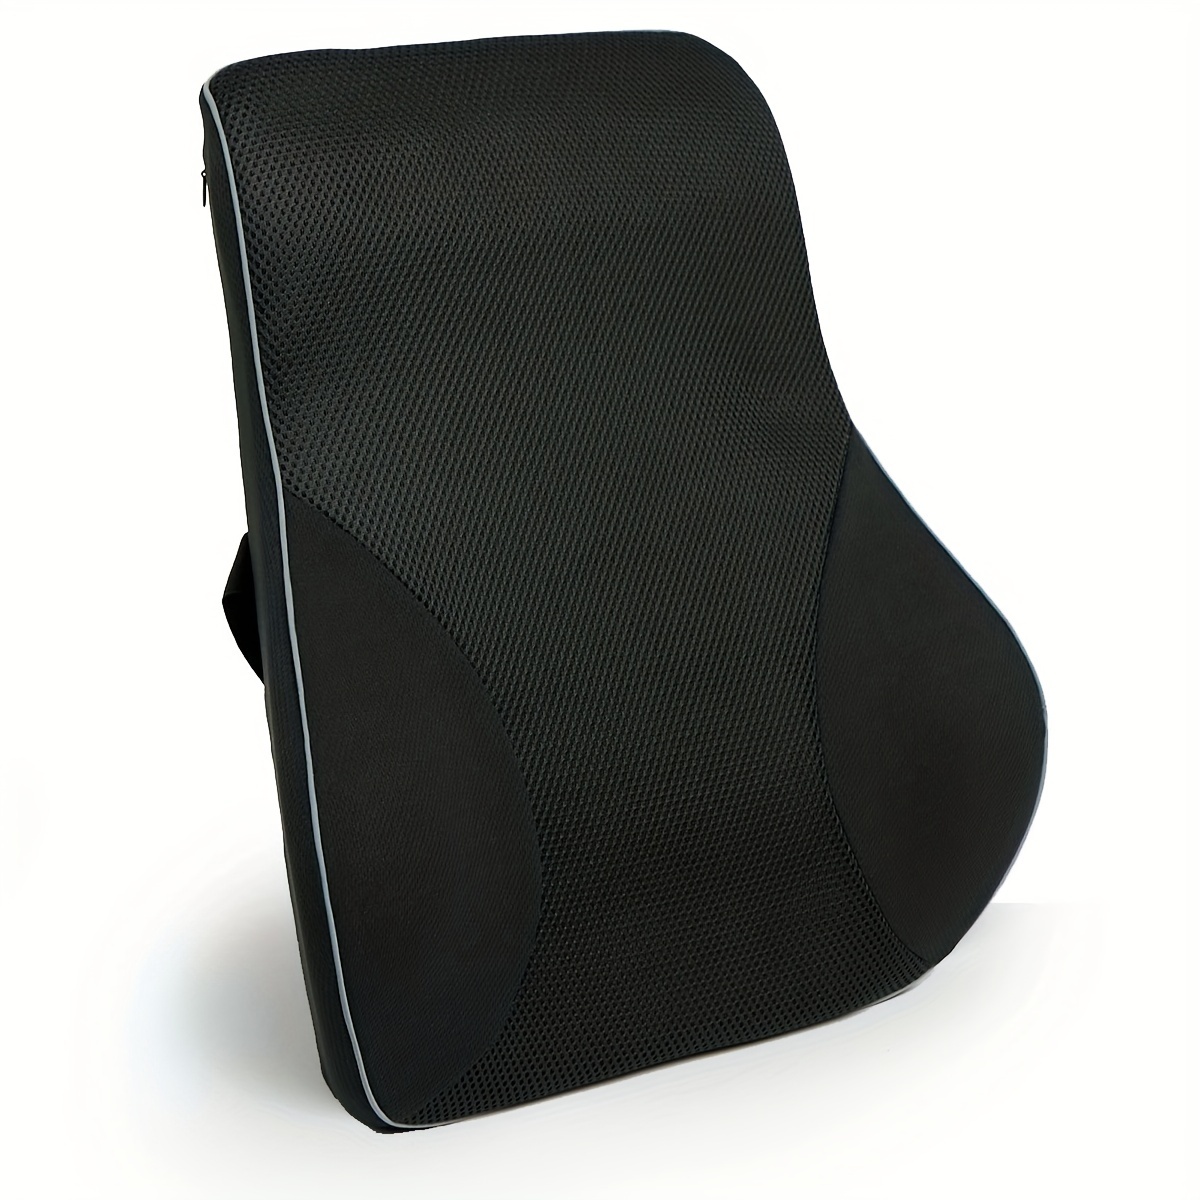 Modvel Gel Enhanced Seat Cushion | Memory Foam Pillow for Office Chair Grey